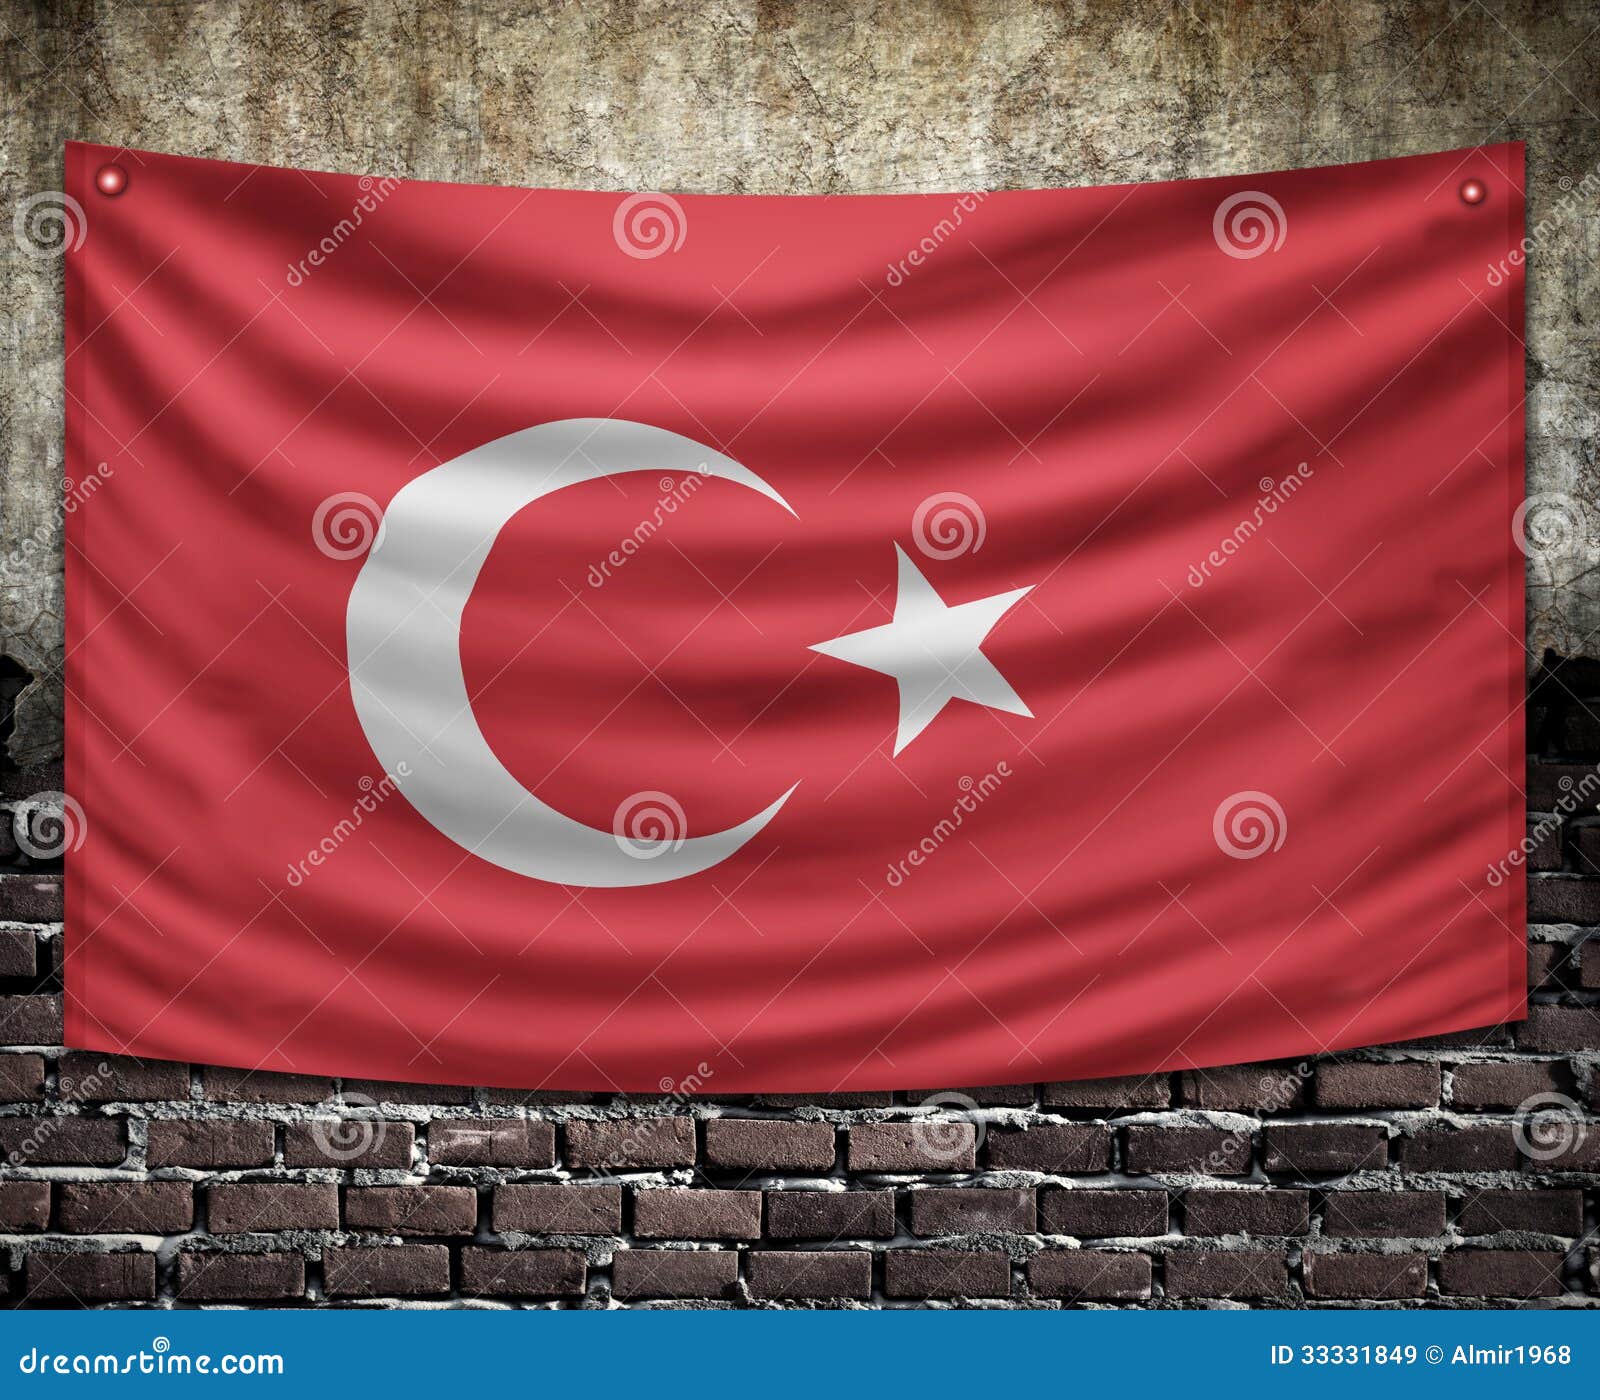 Сколько звезд на флаге турции. Флаг Турции 1936. Старый флаг Турции. Турецкий флаг на стене. Флаги Турции висячие.